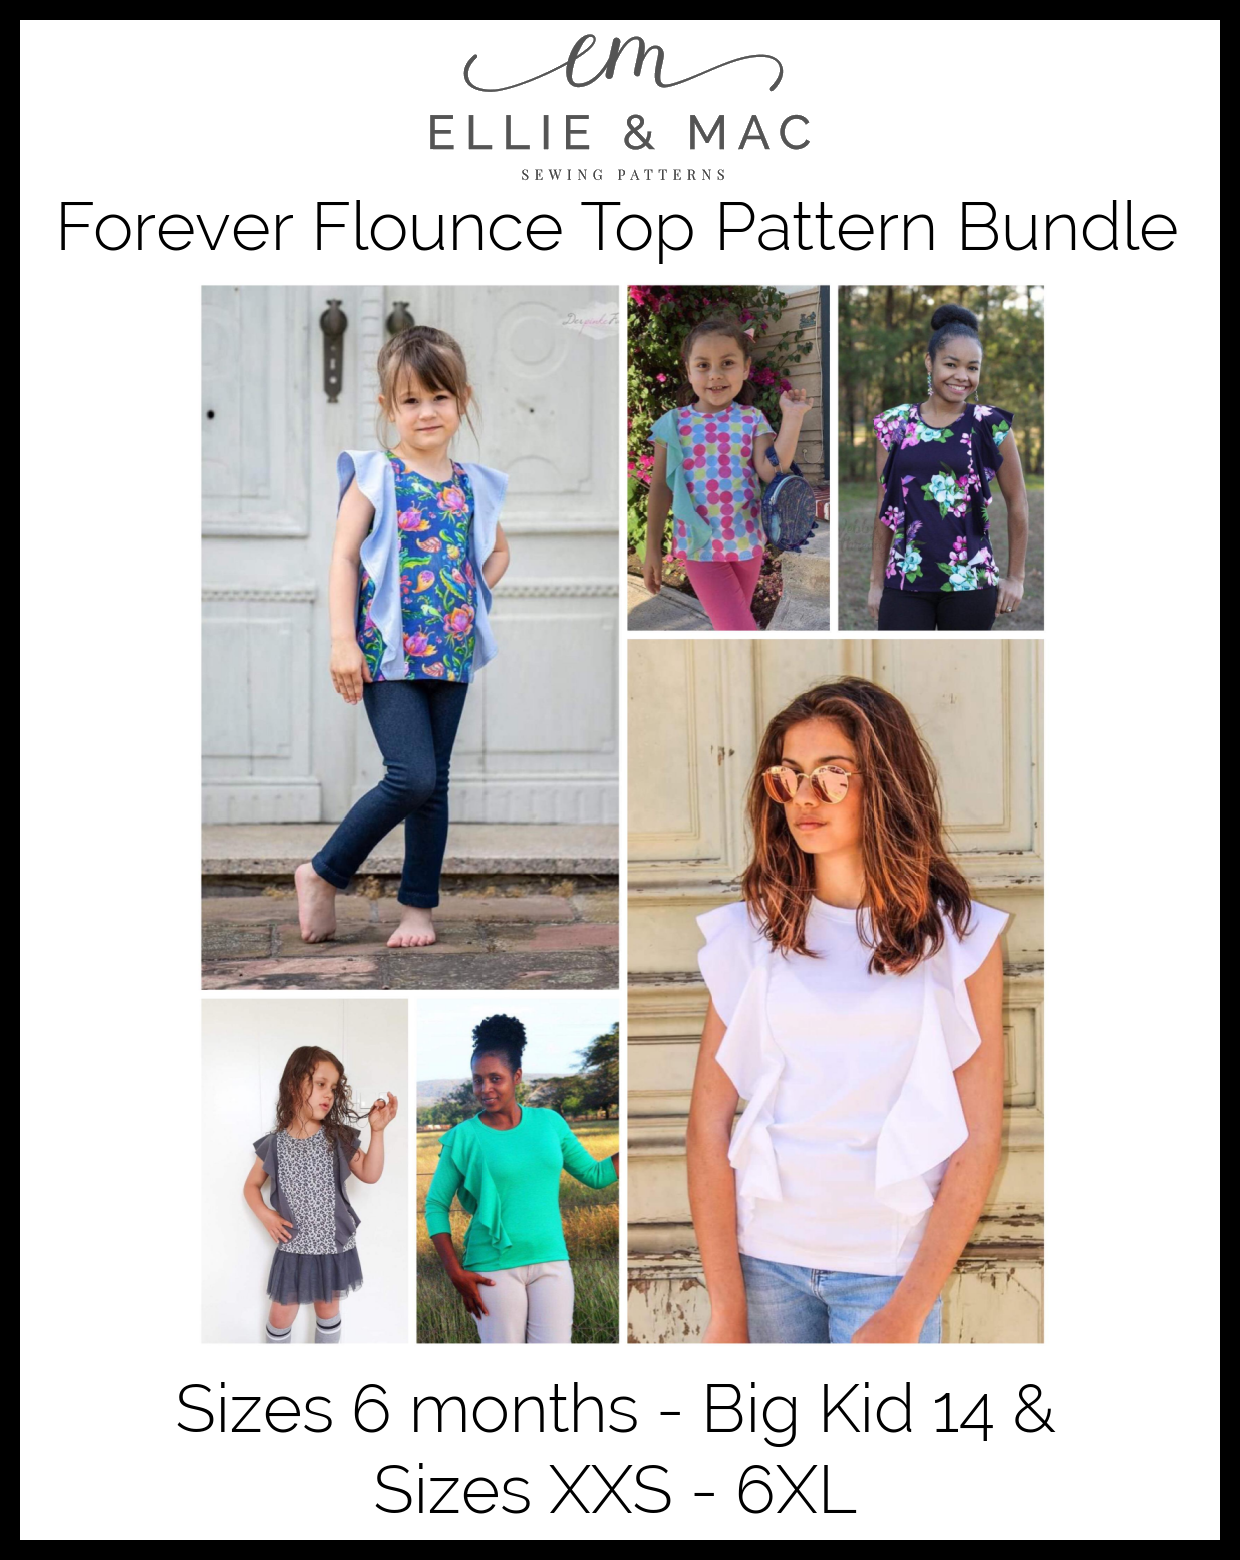 Forever Flounce Top Pattern Bundle